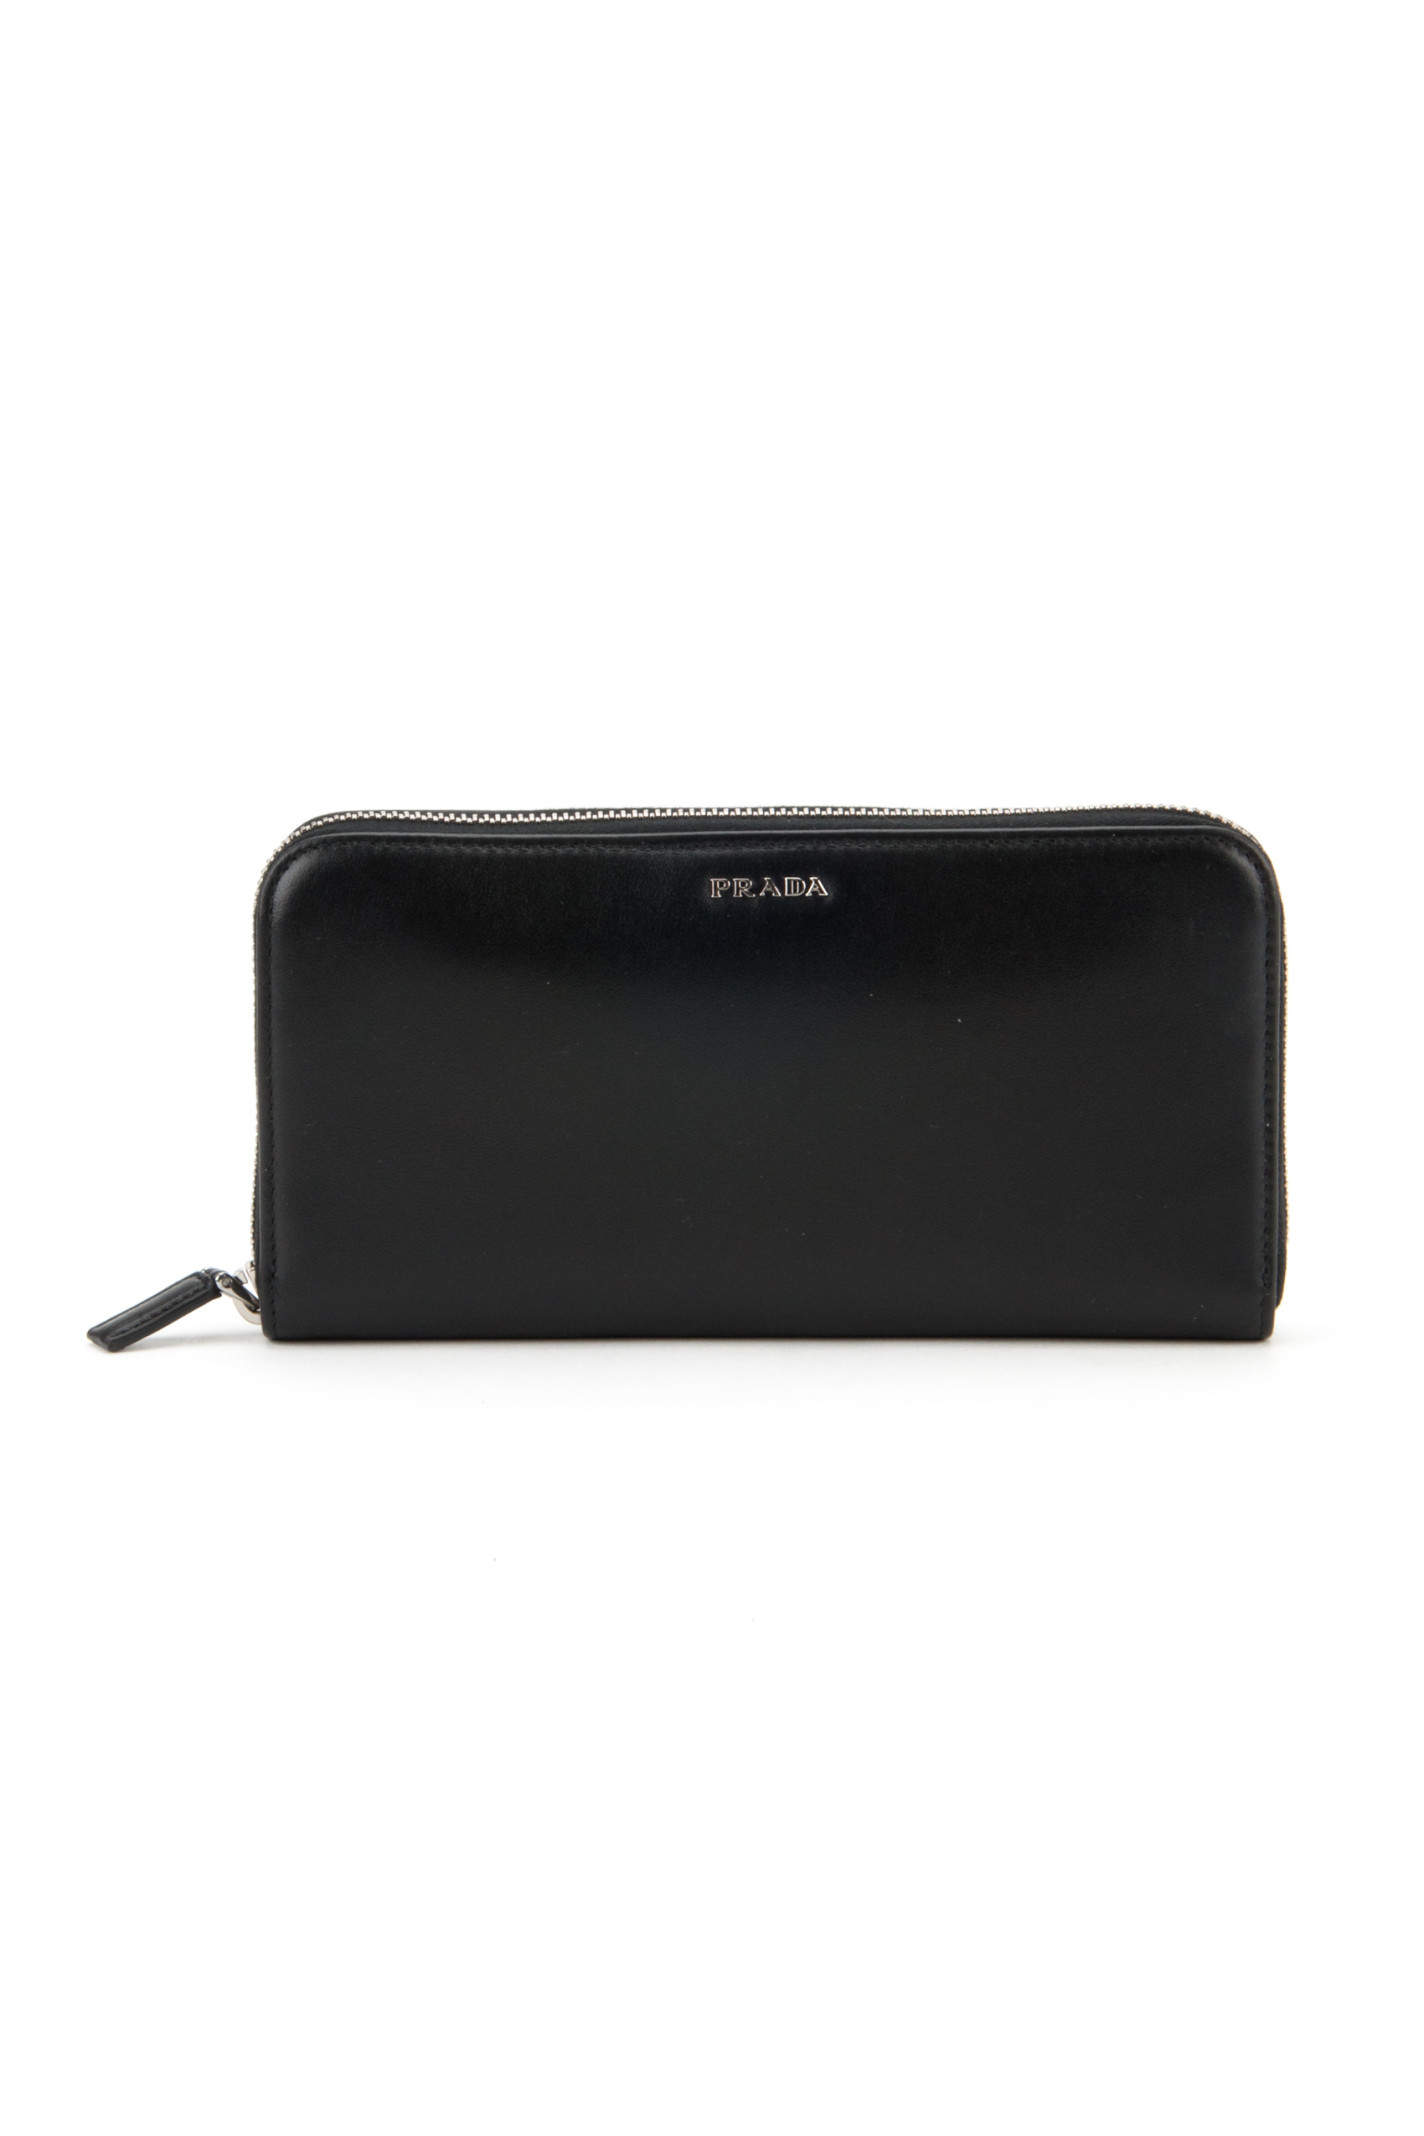 Prada Soft Calf Wallet in Black for Men (NERO+FUOCO) | Lyst  